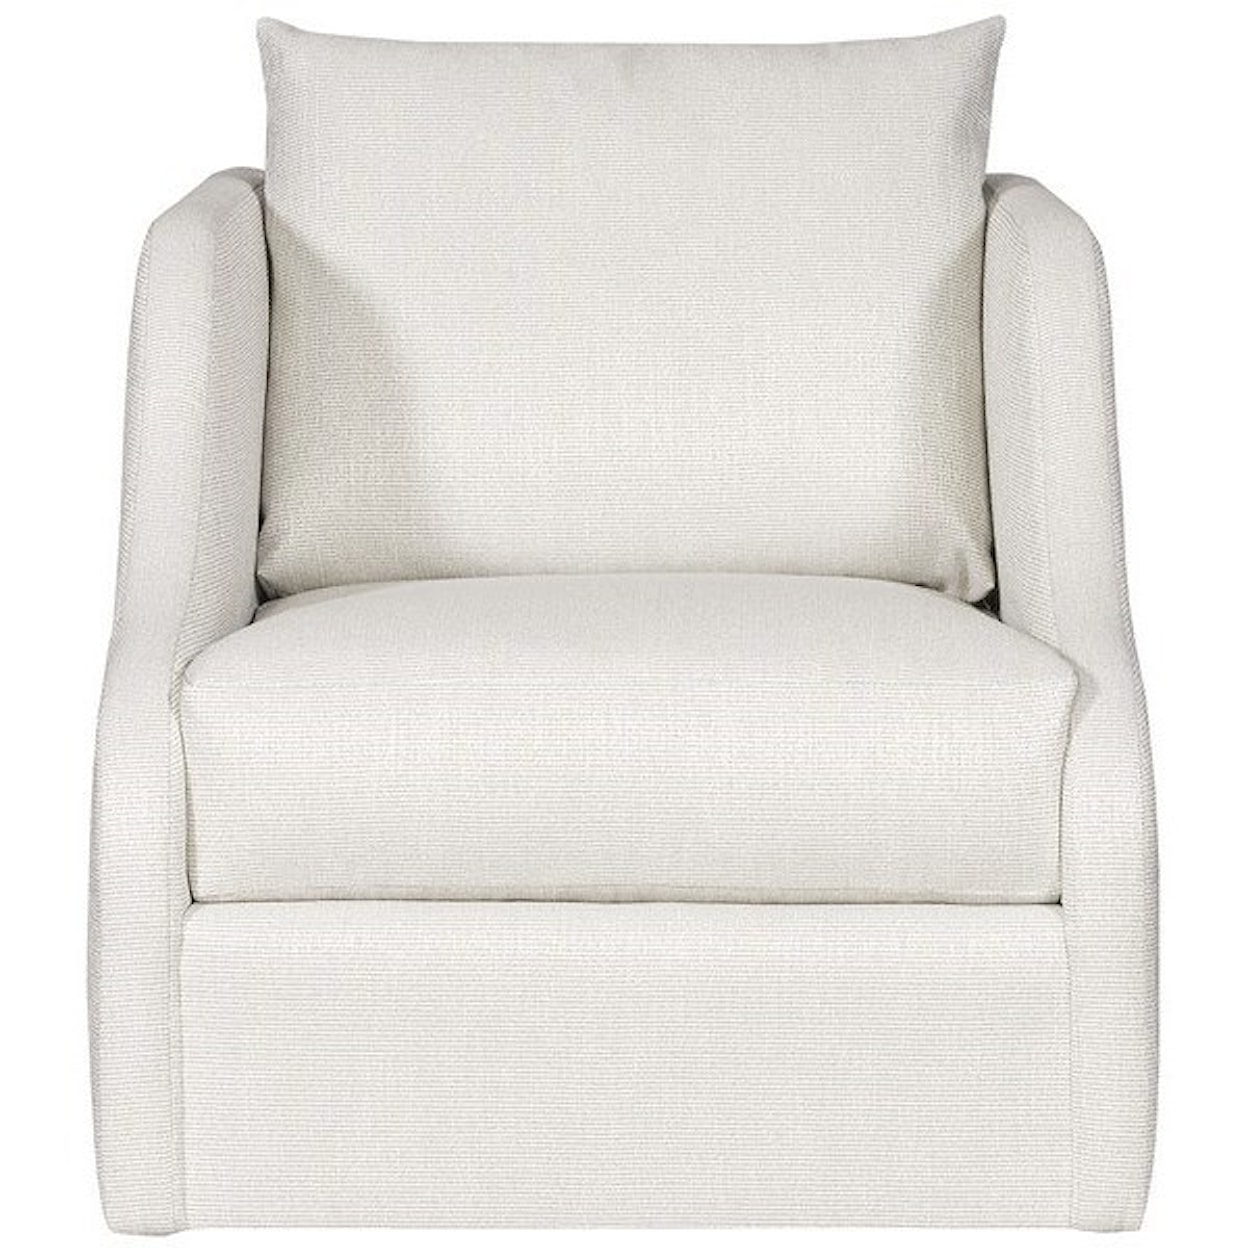 Vanguard Furniture Cora Swivel Chair